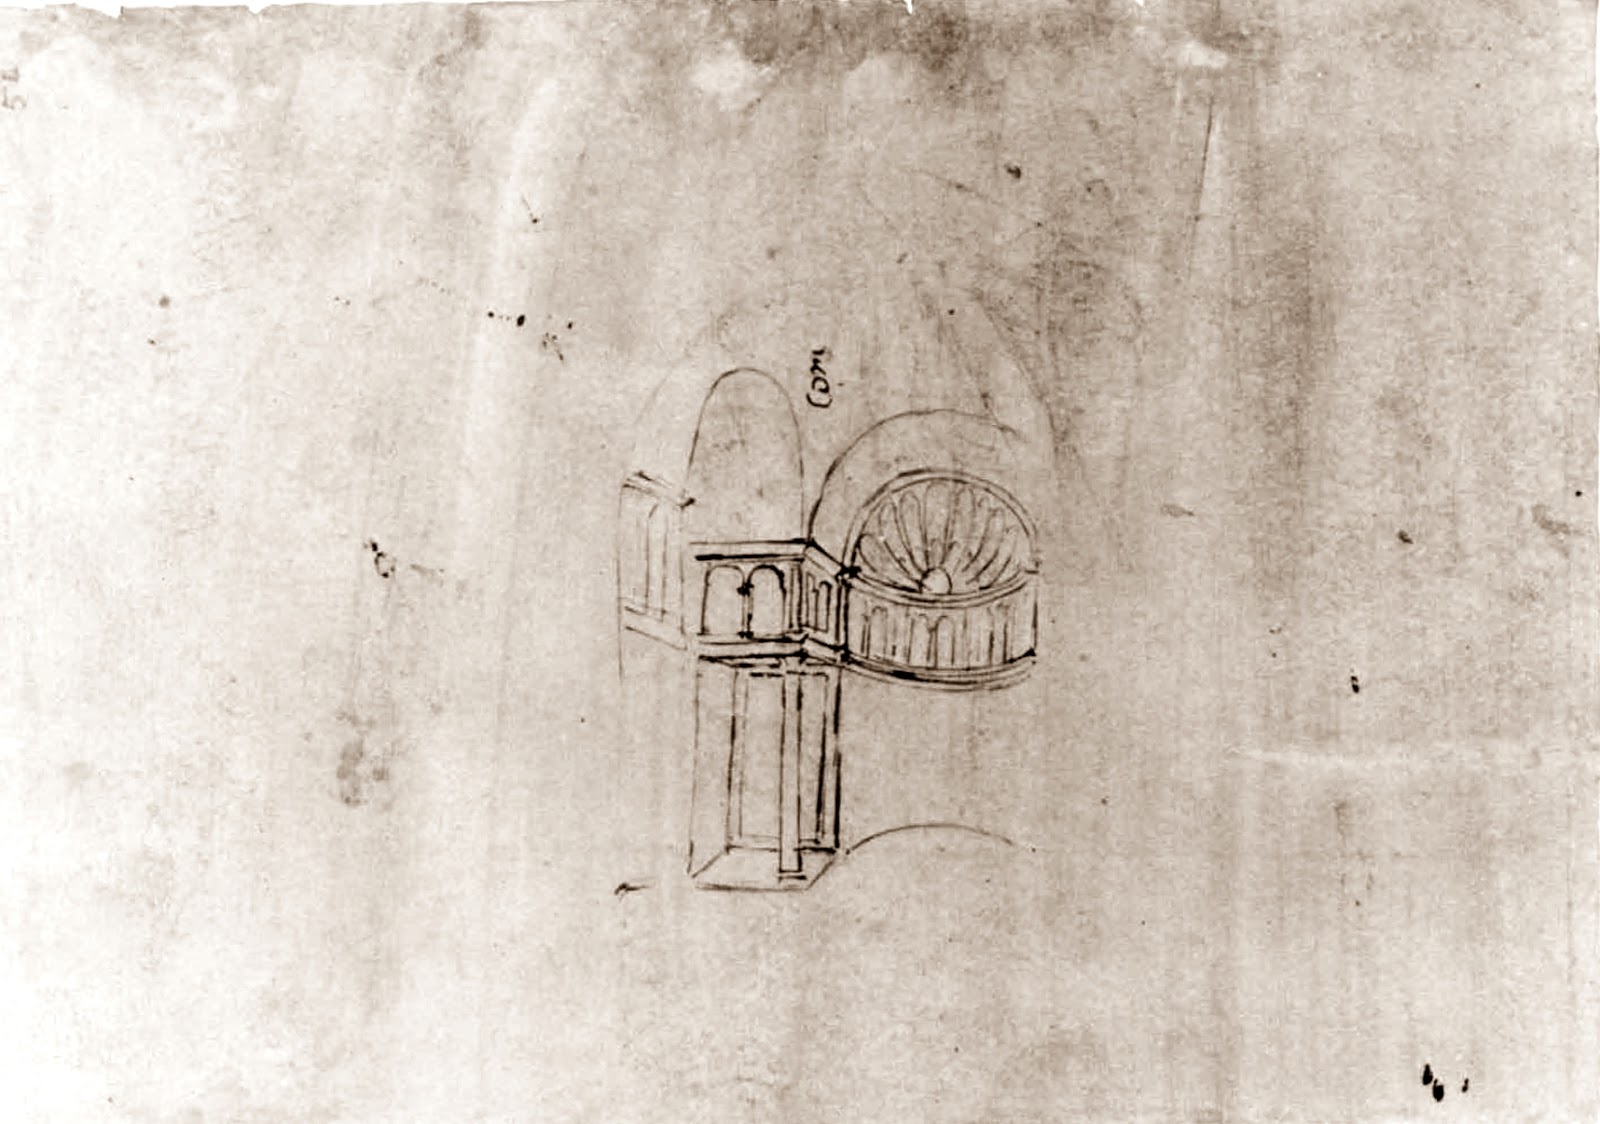 Leonardo+da+Vinci-1452-1519 (755).jpg